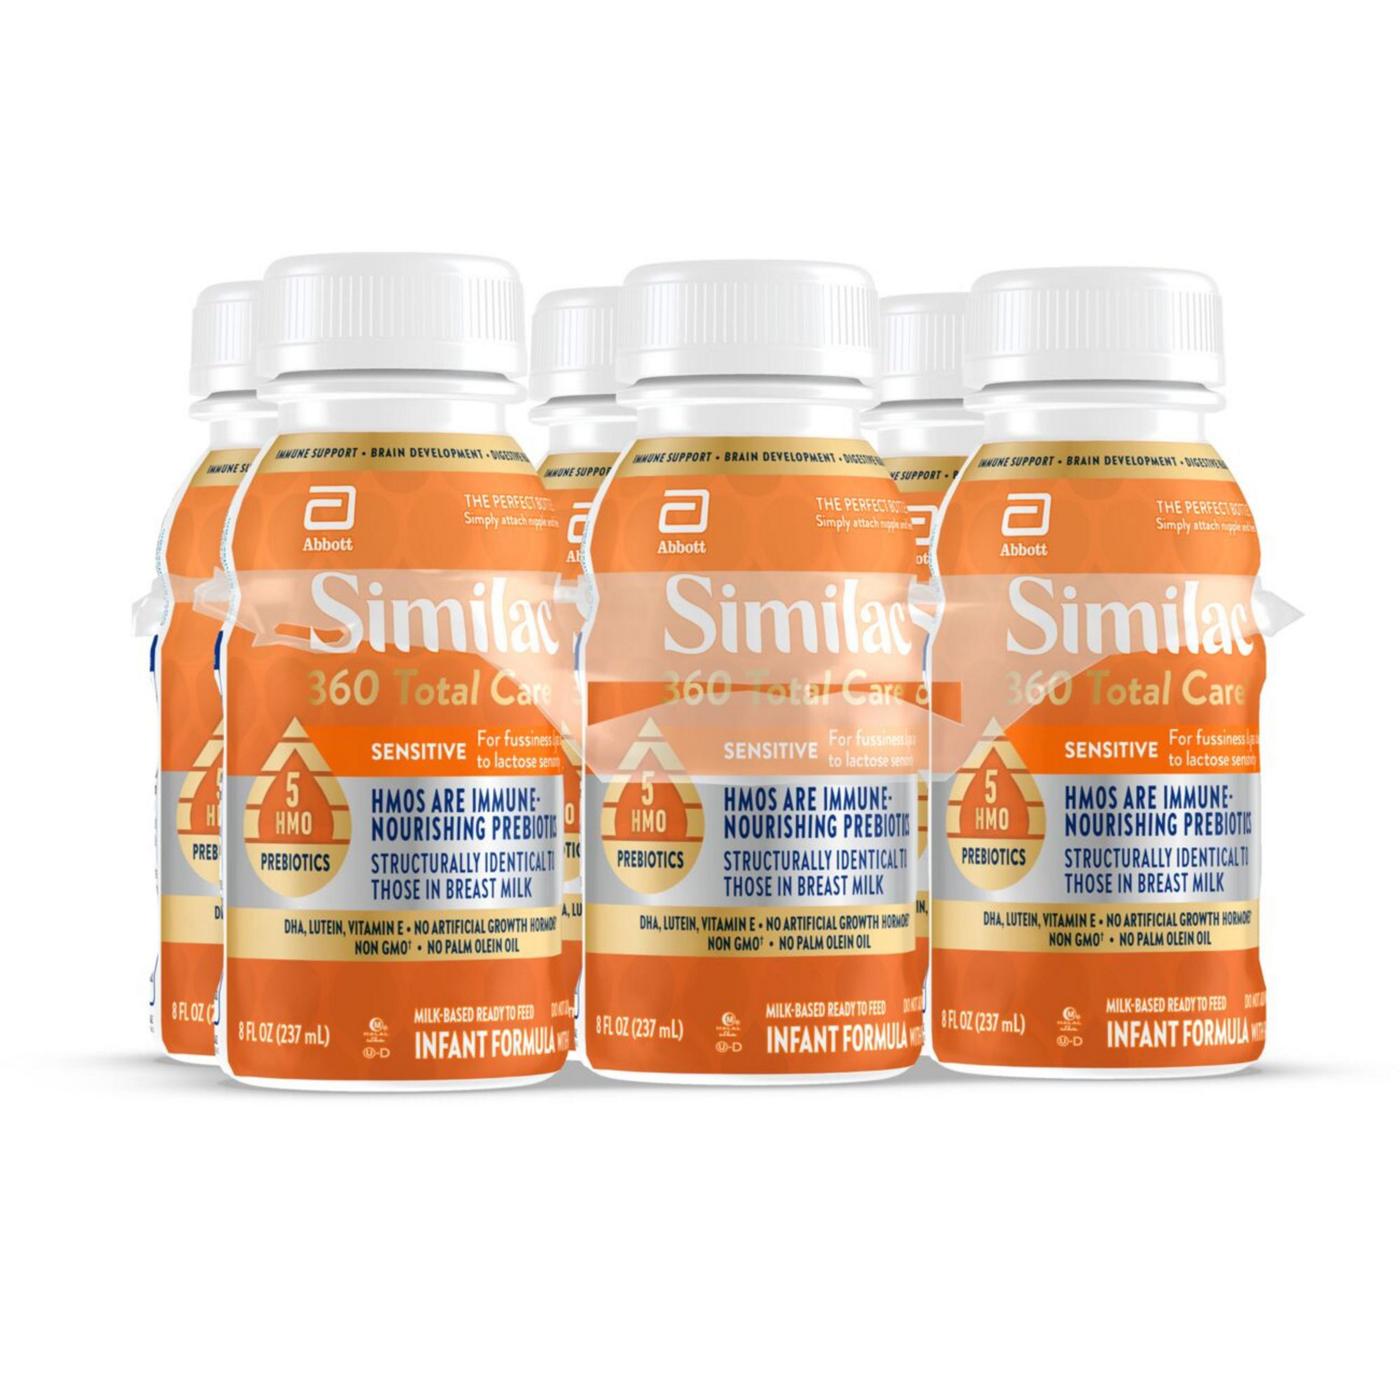 Similac 360 Total Care Sensitive Ready-to-Feed Infant Formula with 5 HMO Prebiotics, 8 oz; image 16 of 17